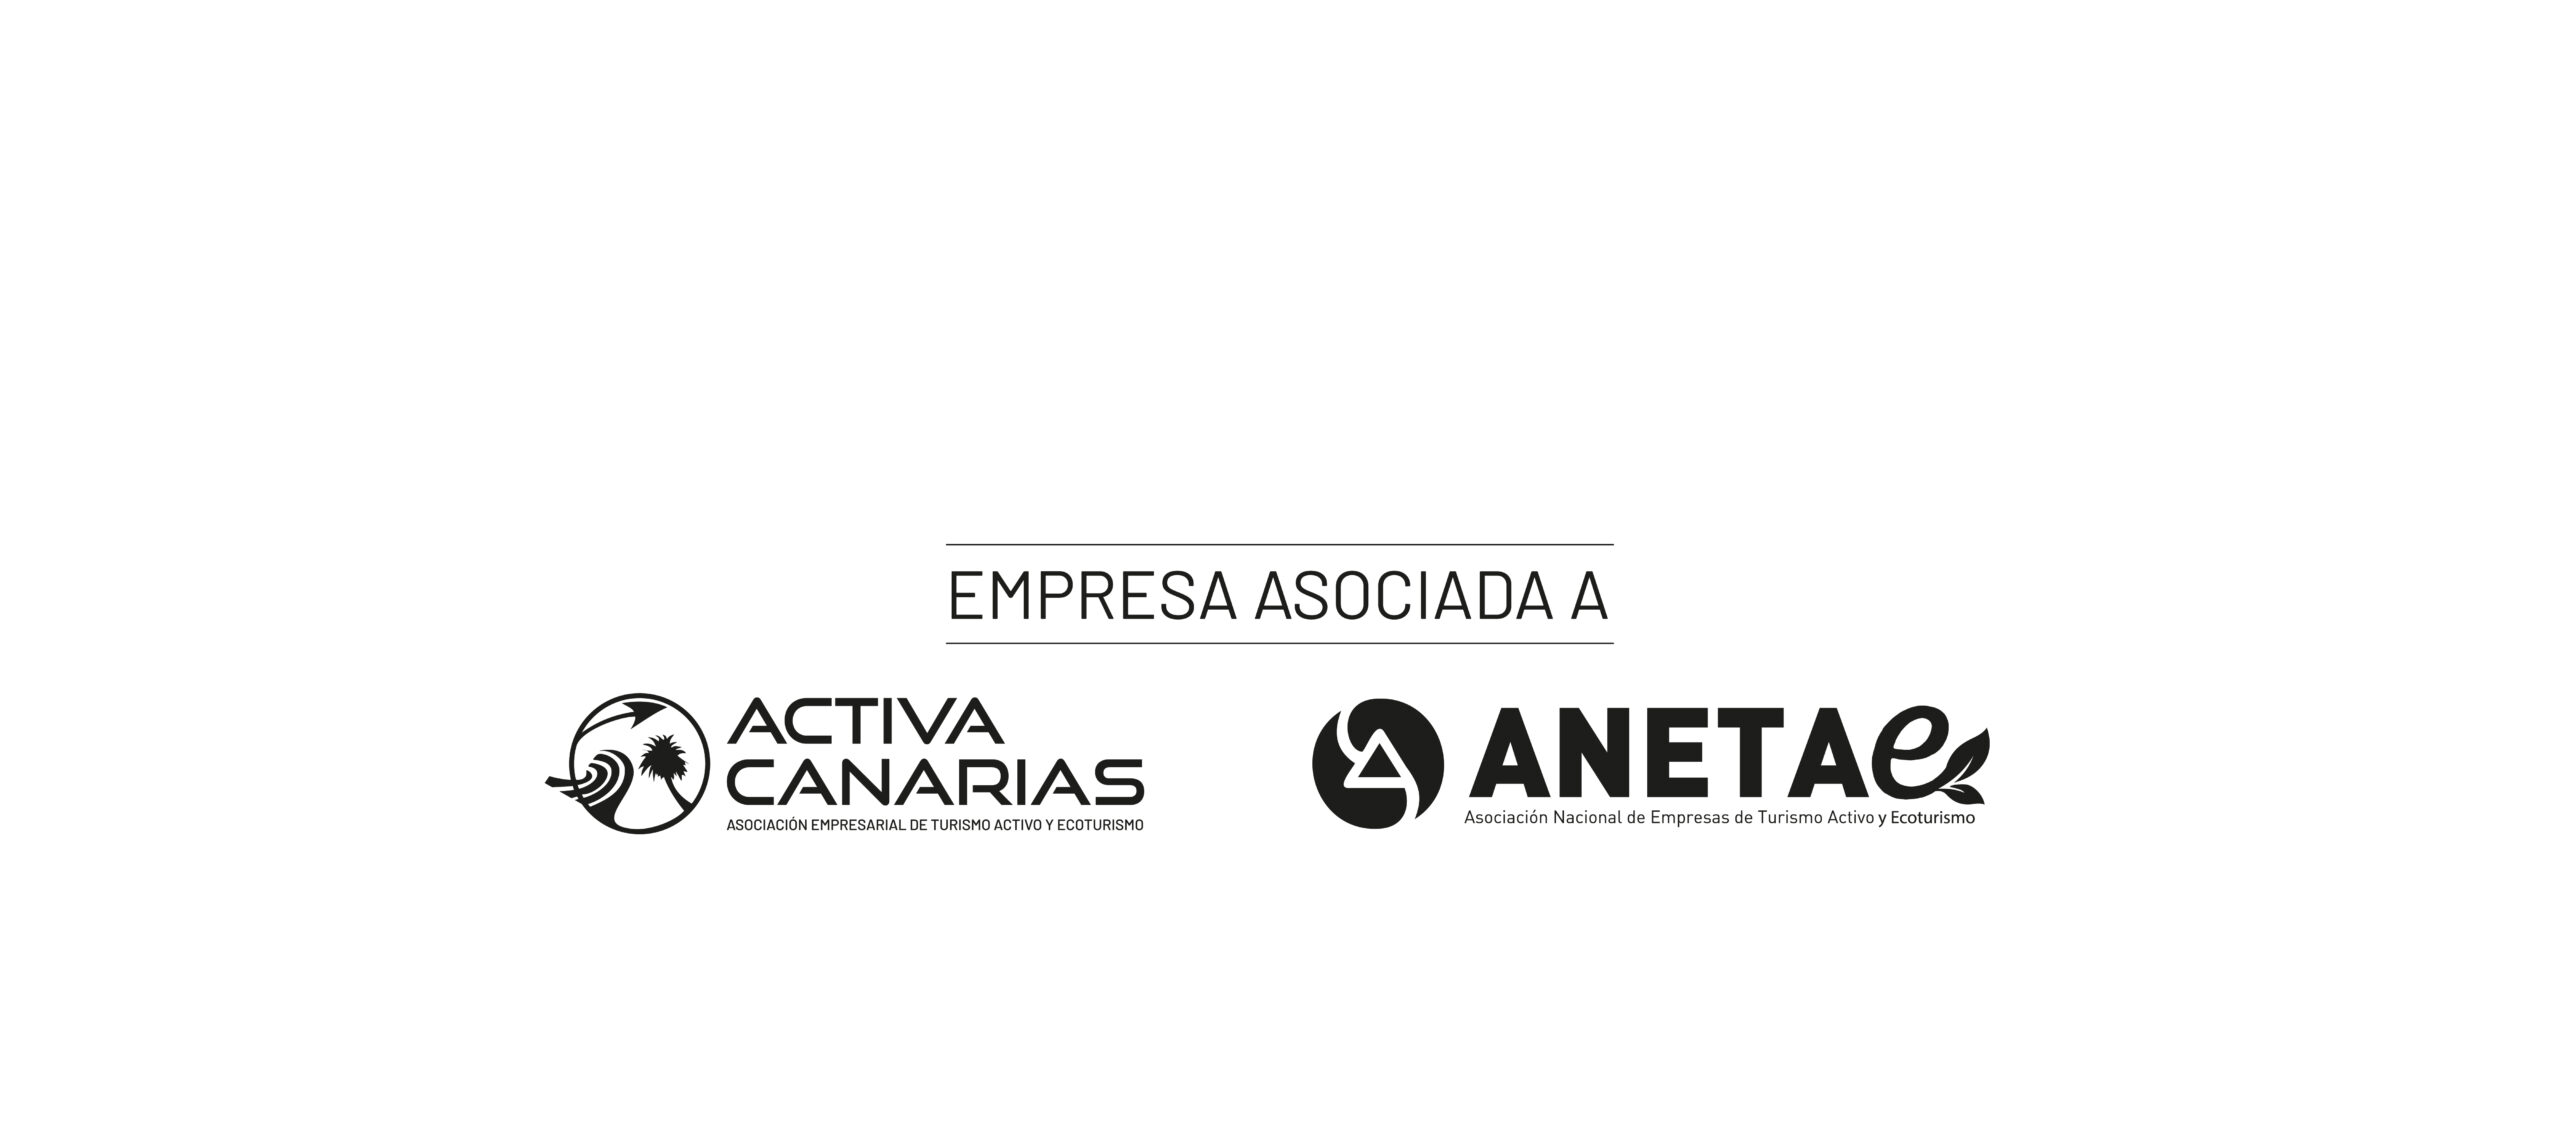 Logos of activa canarias and anetae labeled as associated with "empresa asociada".